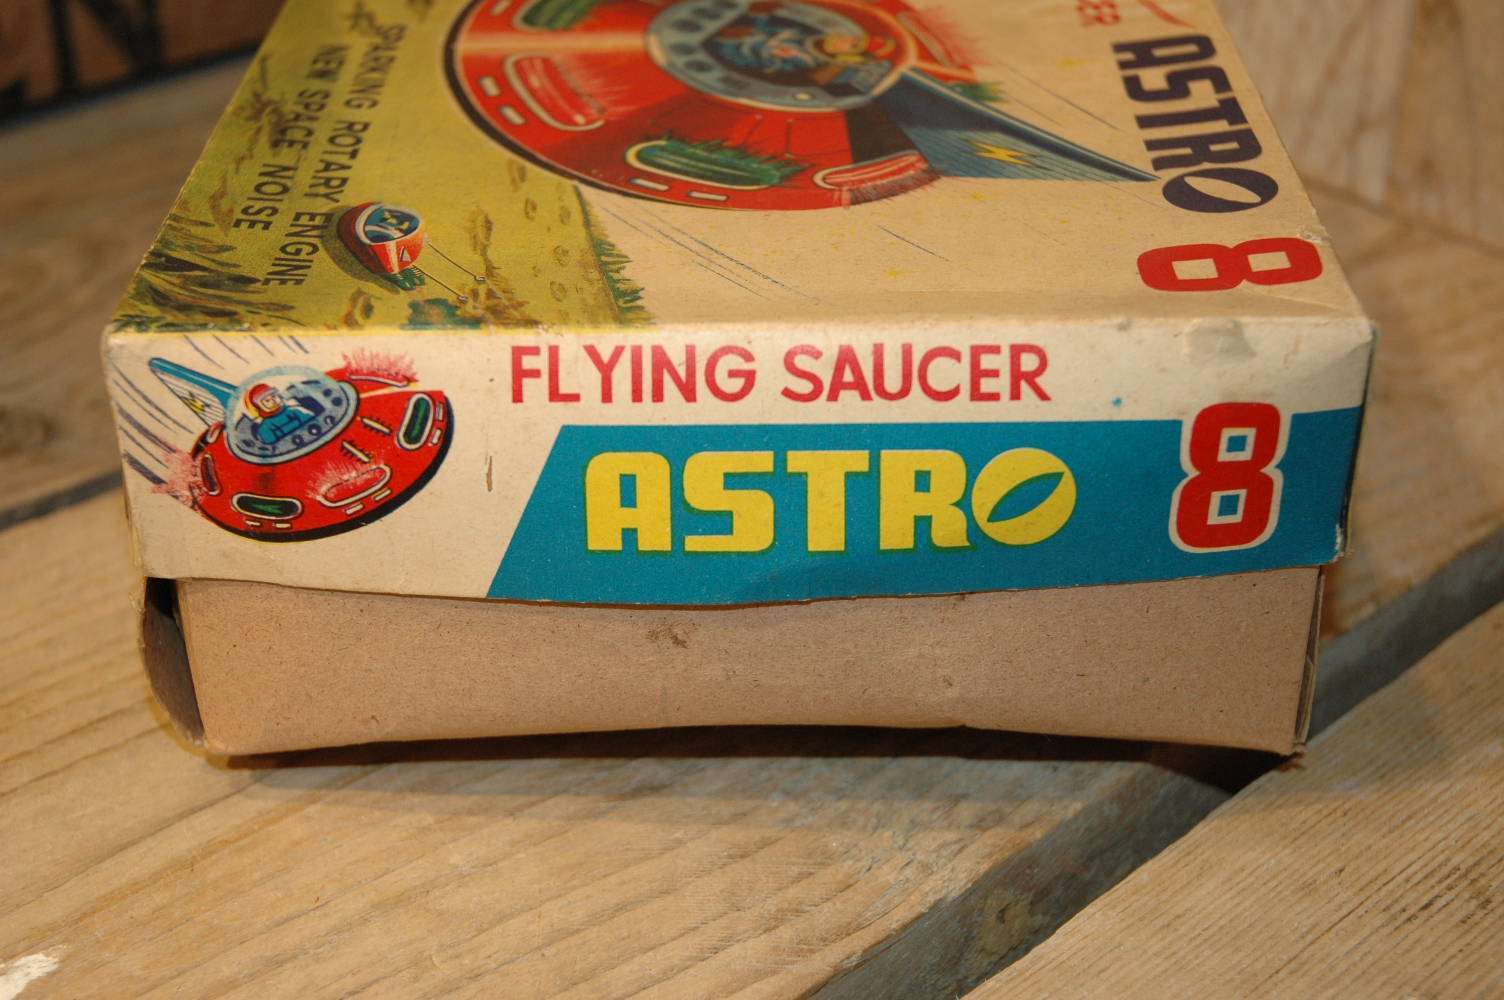 Marubishi - Astro 8 Flying Saucer